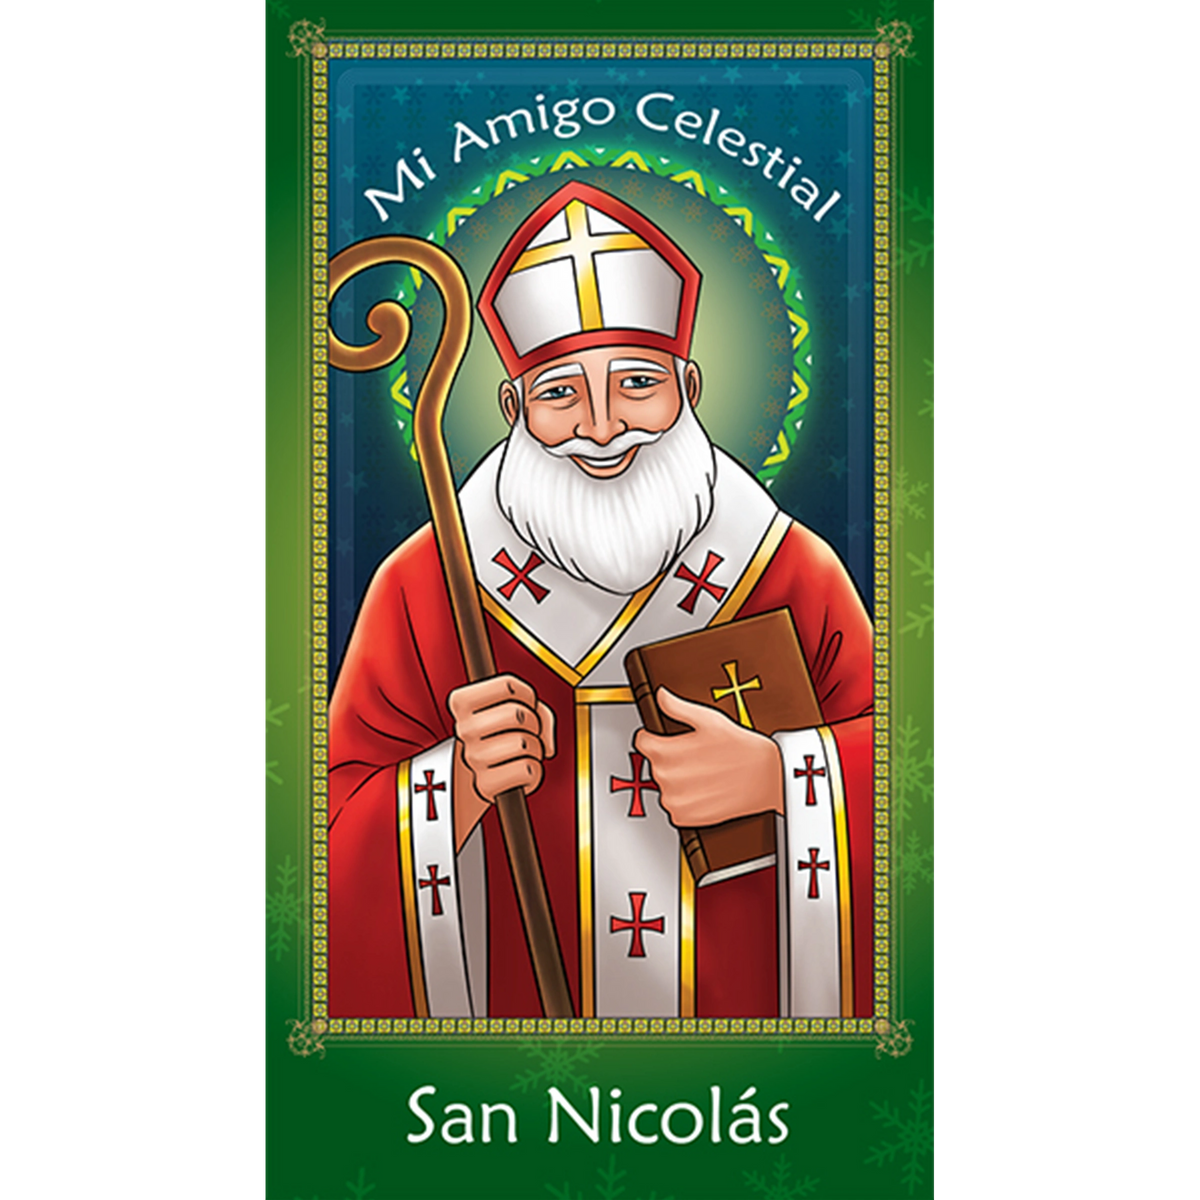 San Nicolas Tarjeta de oración, Saint Nicholas holy card Spanish